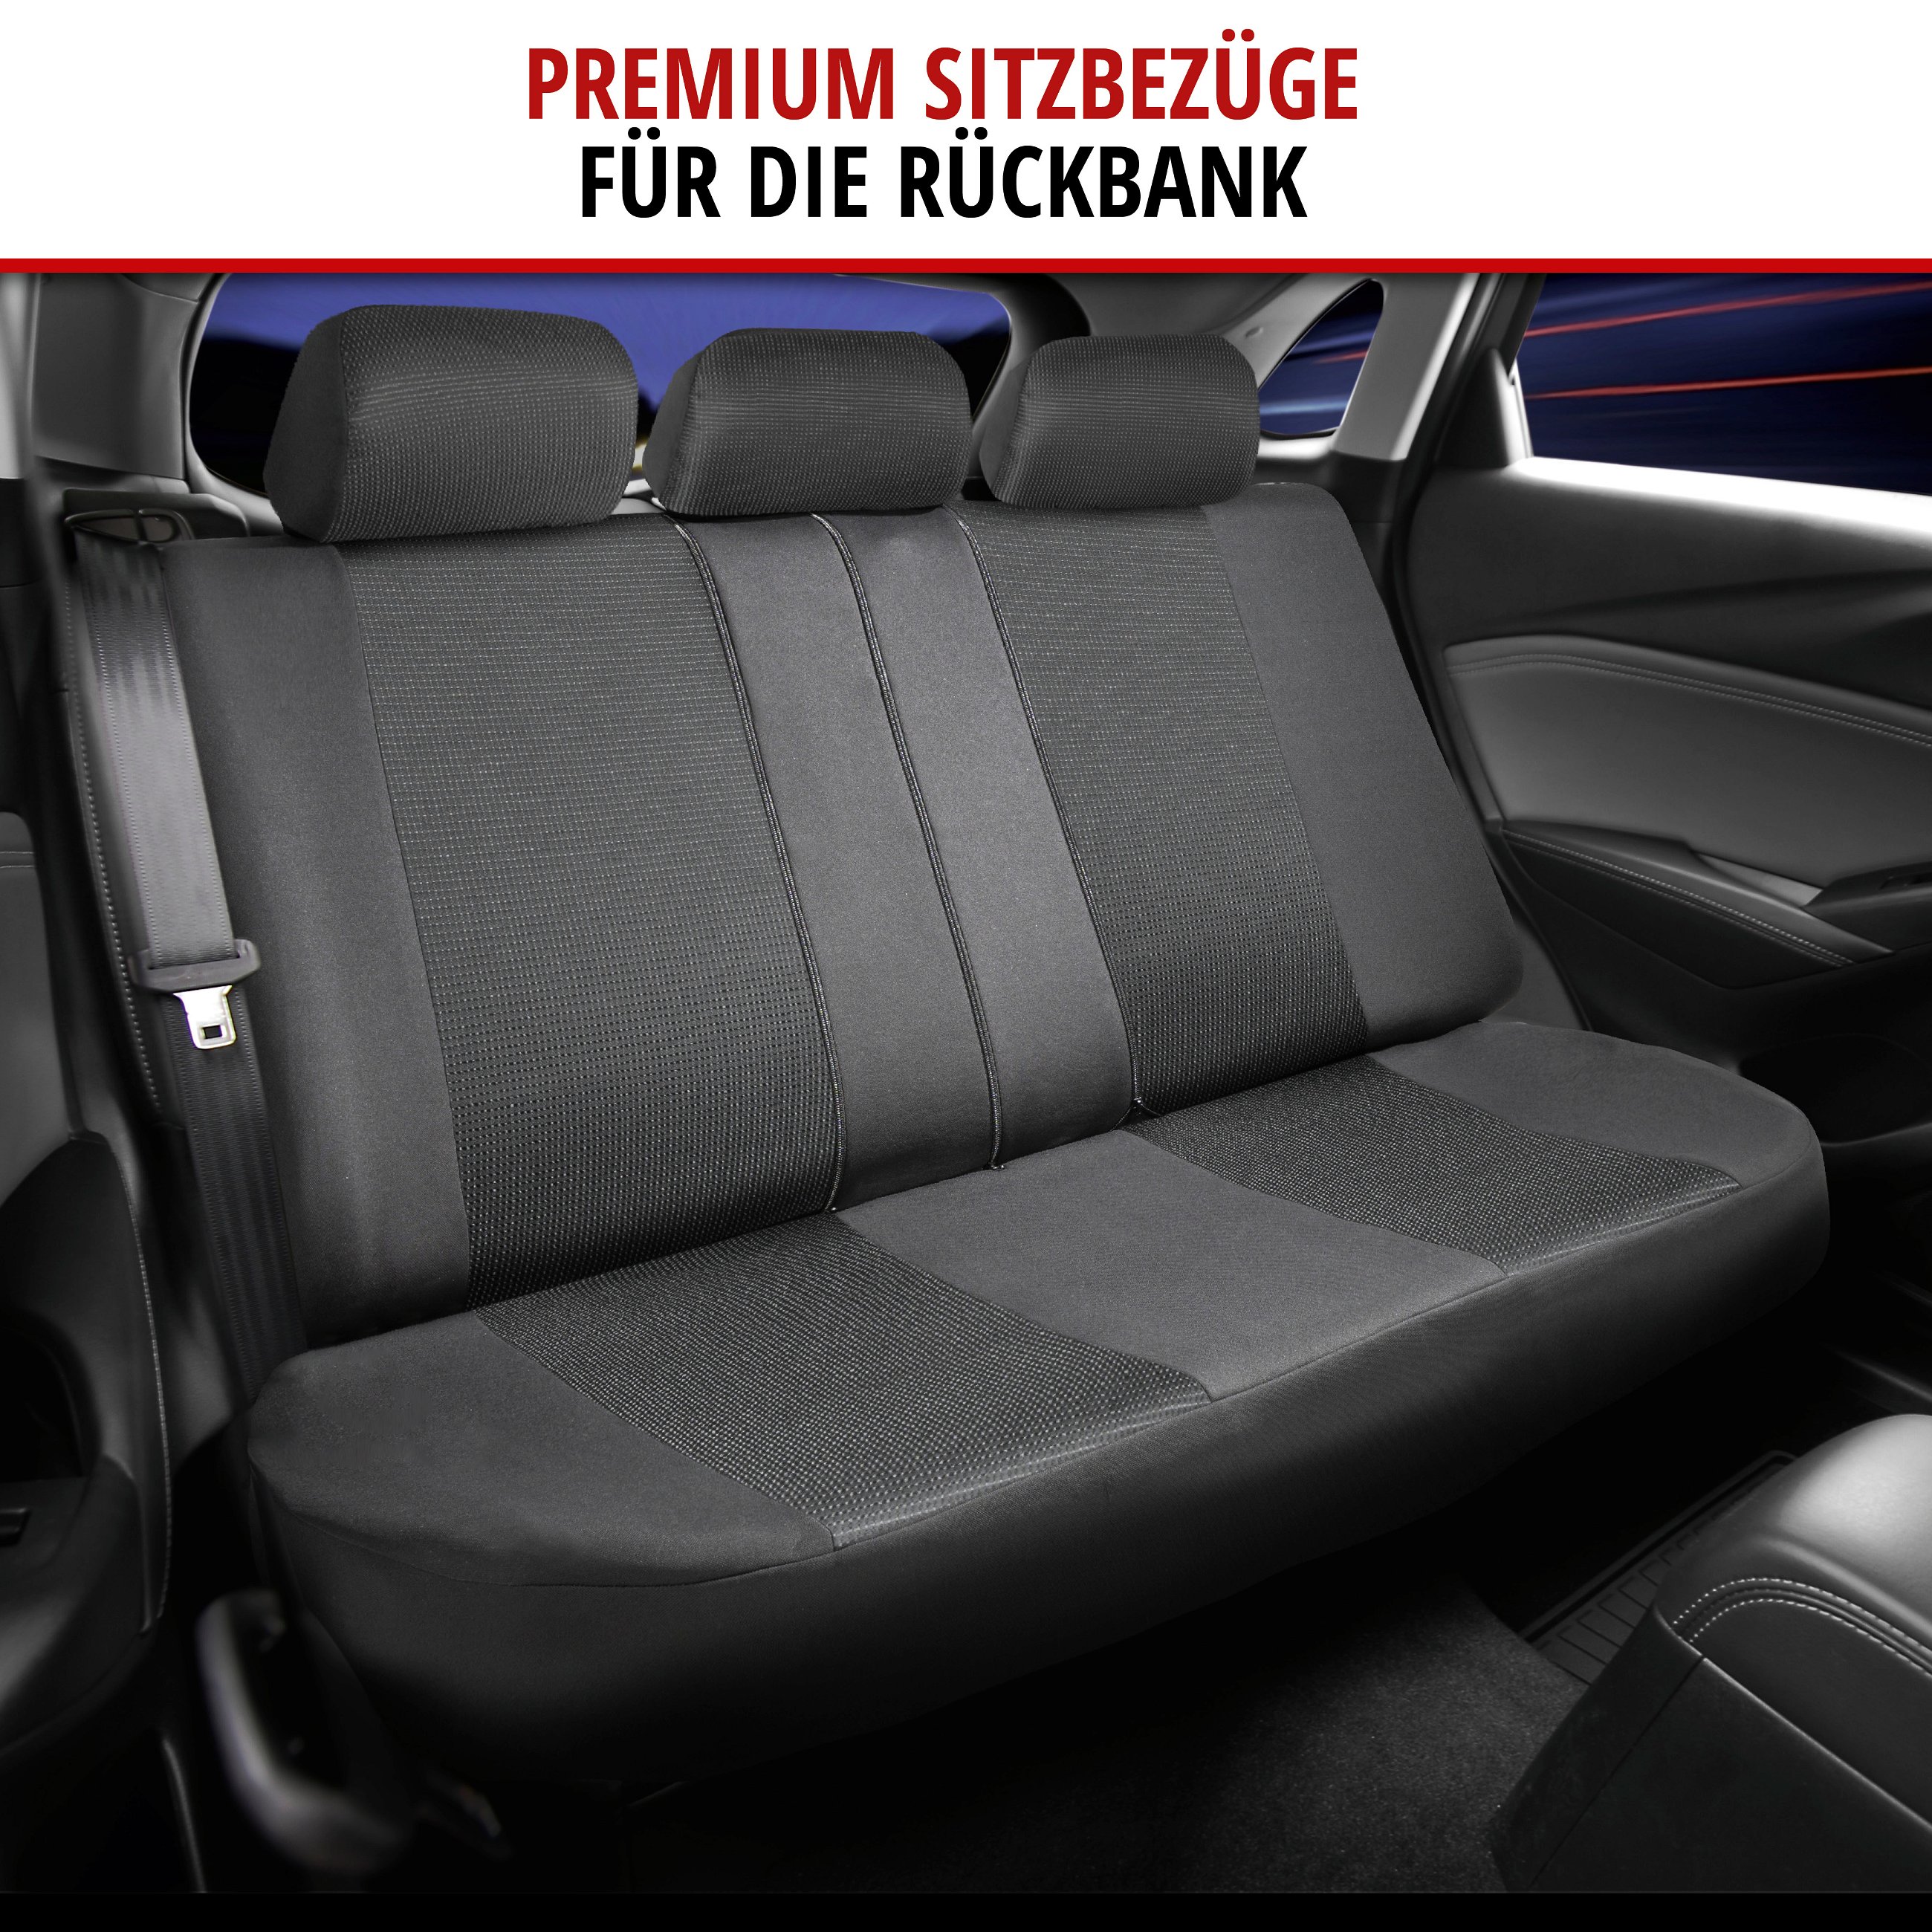 ZIPP IT Premium Esprit Autositzbezüge Komplettset mit Reißverschluss-System, Highbacksitze